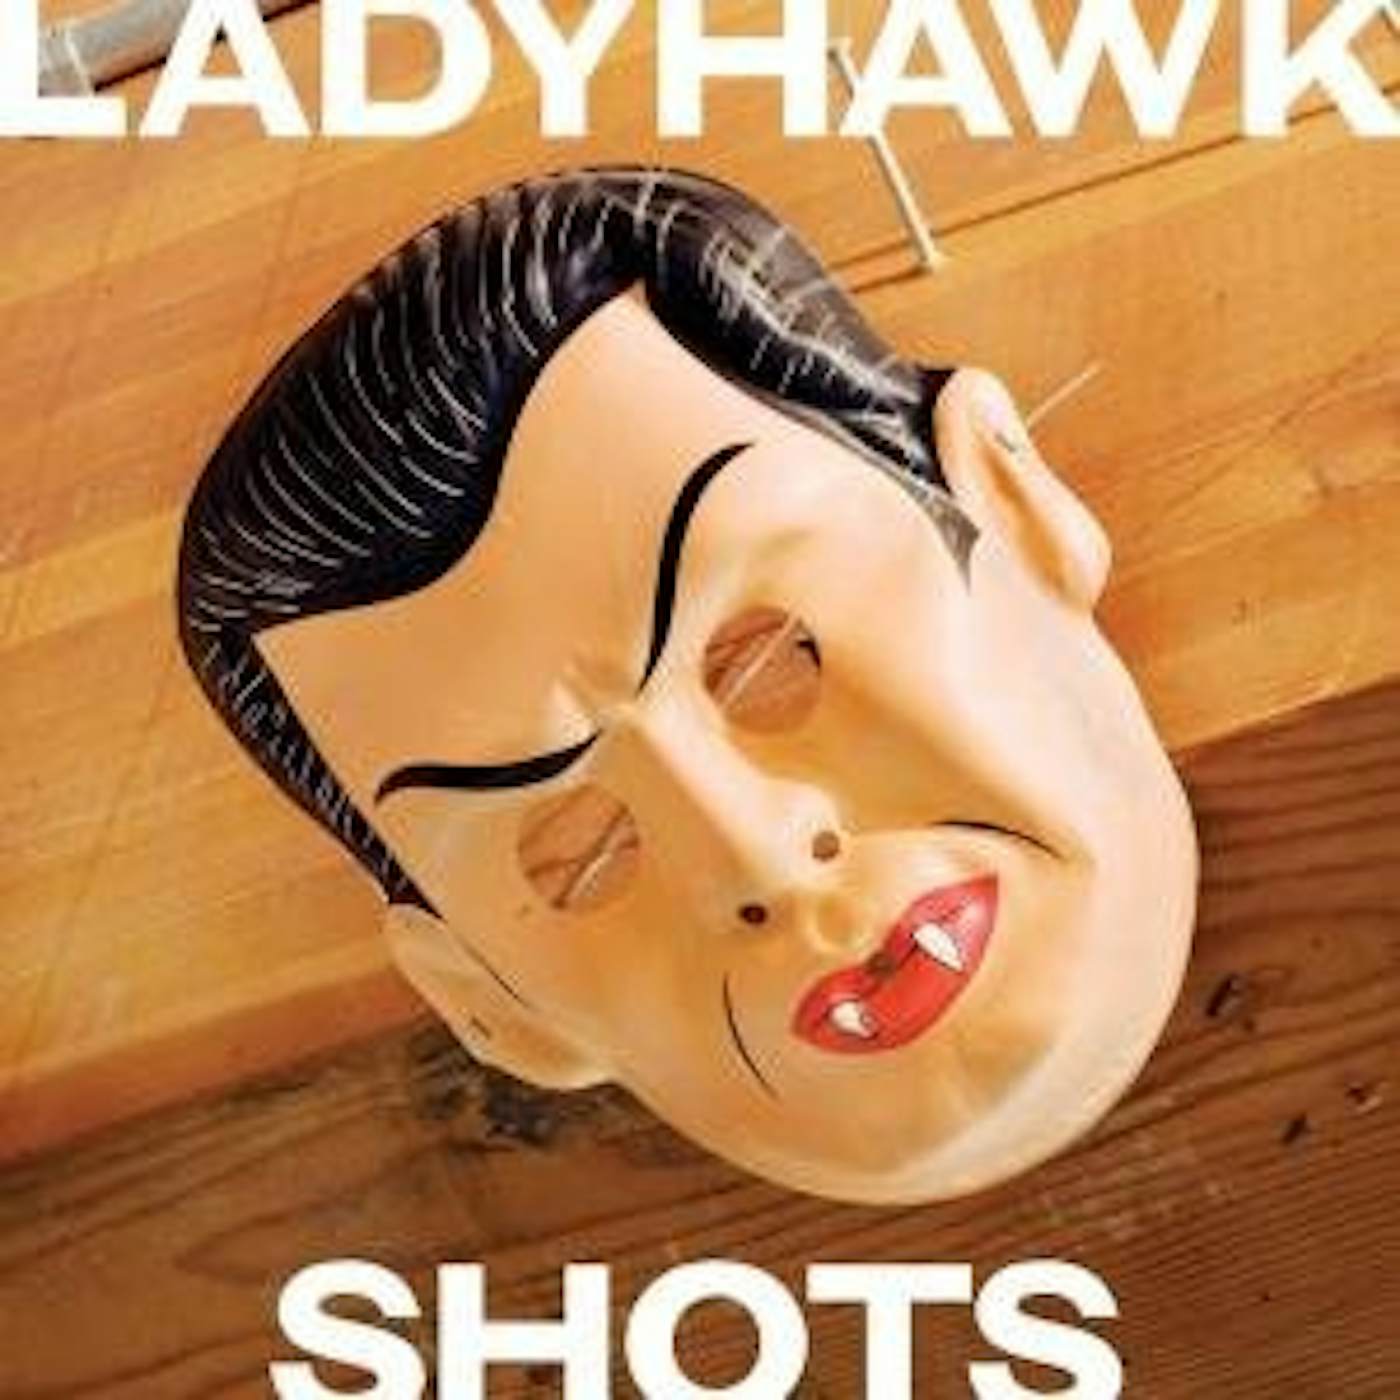 Ladyhawk Shots Vinyl Record